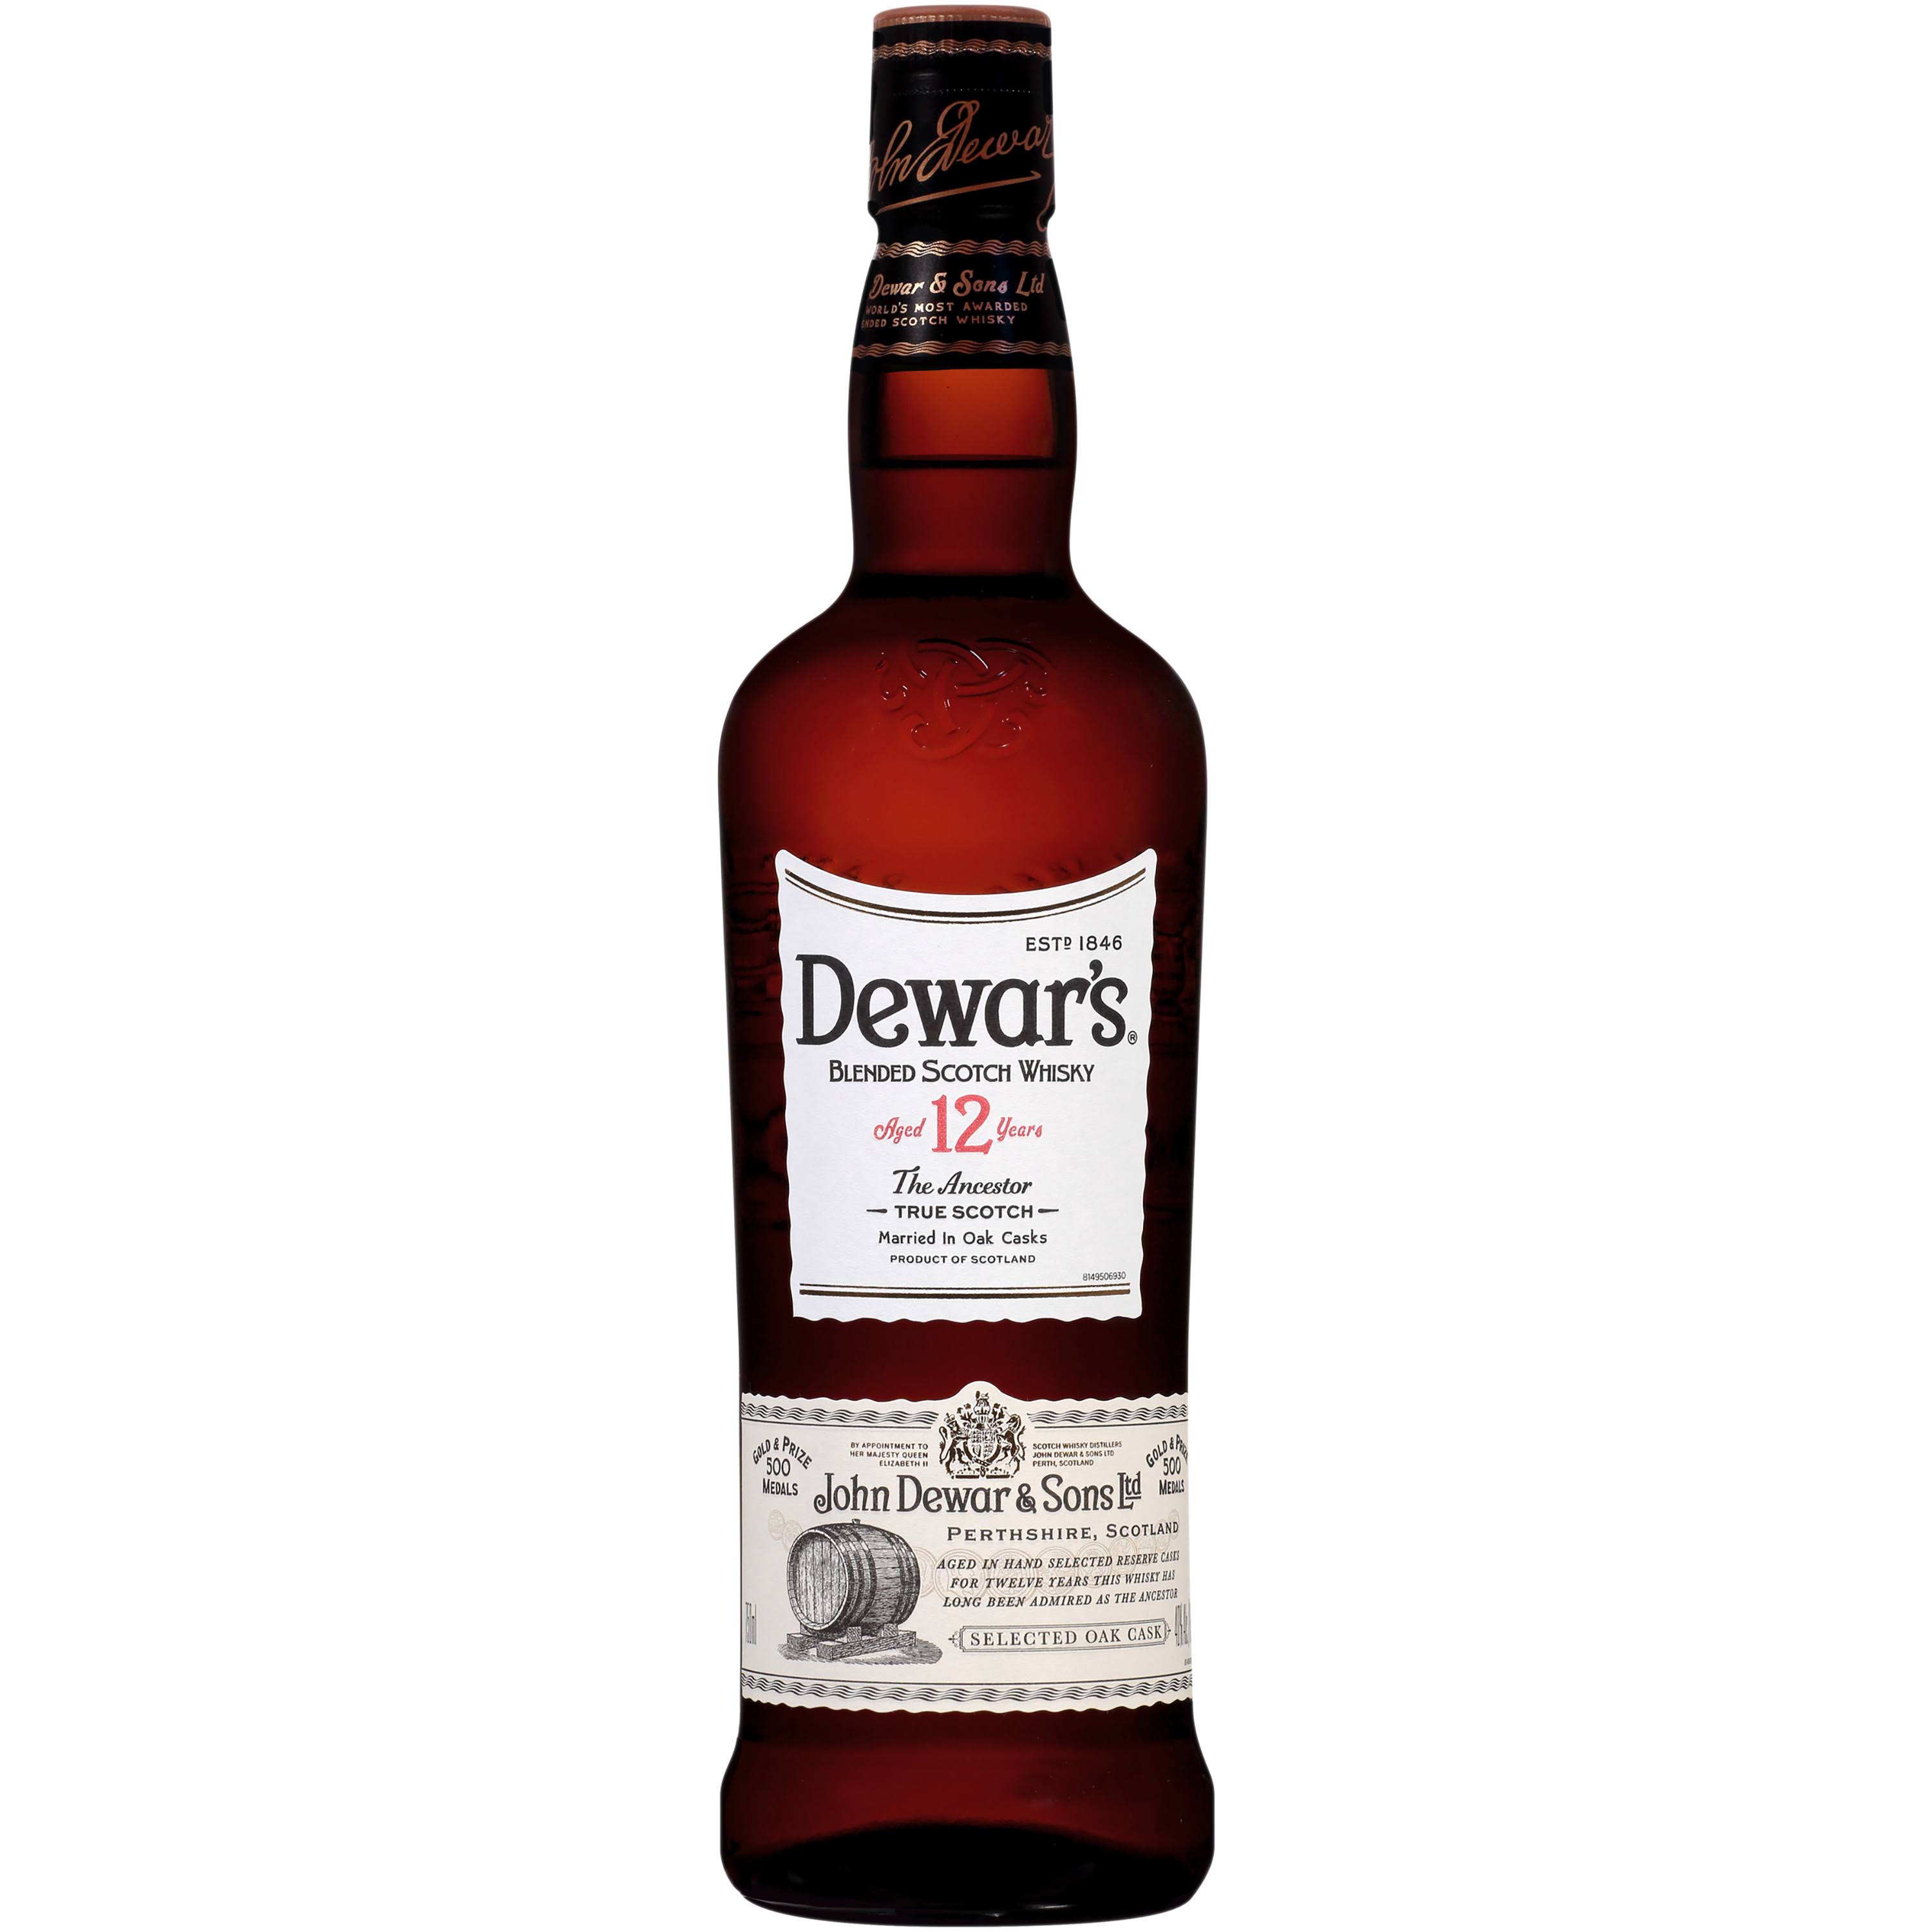 Dewars 12 Year Old Blended Scotch Whisky